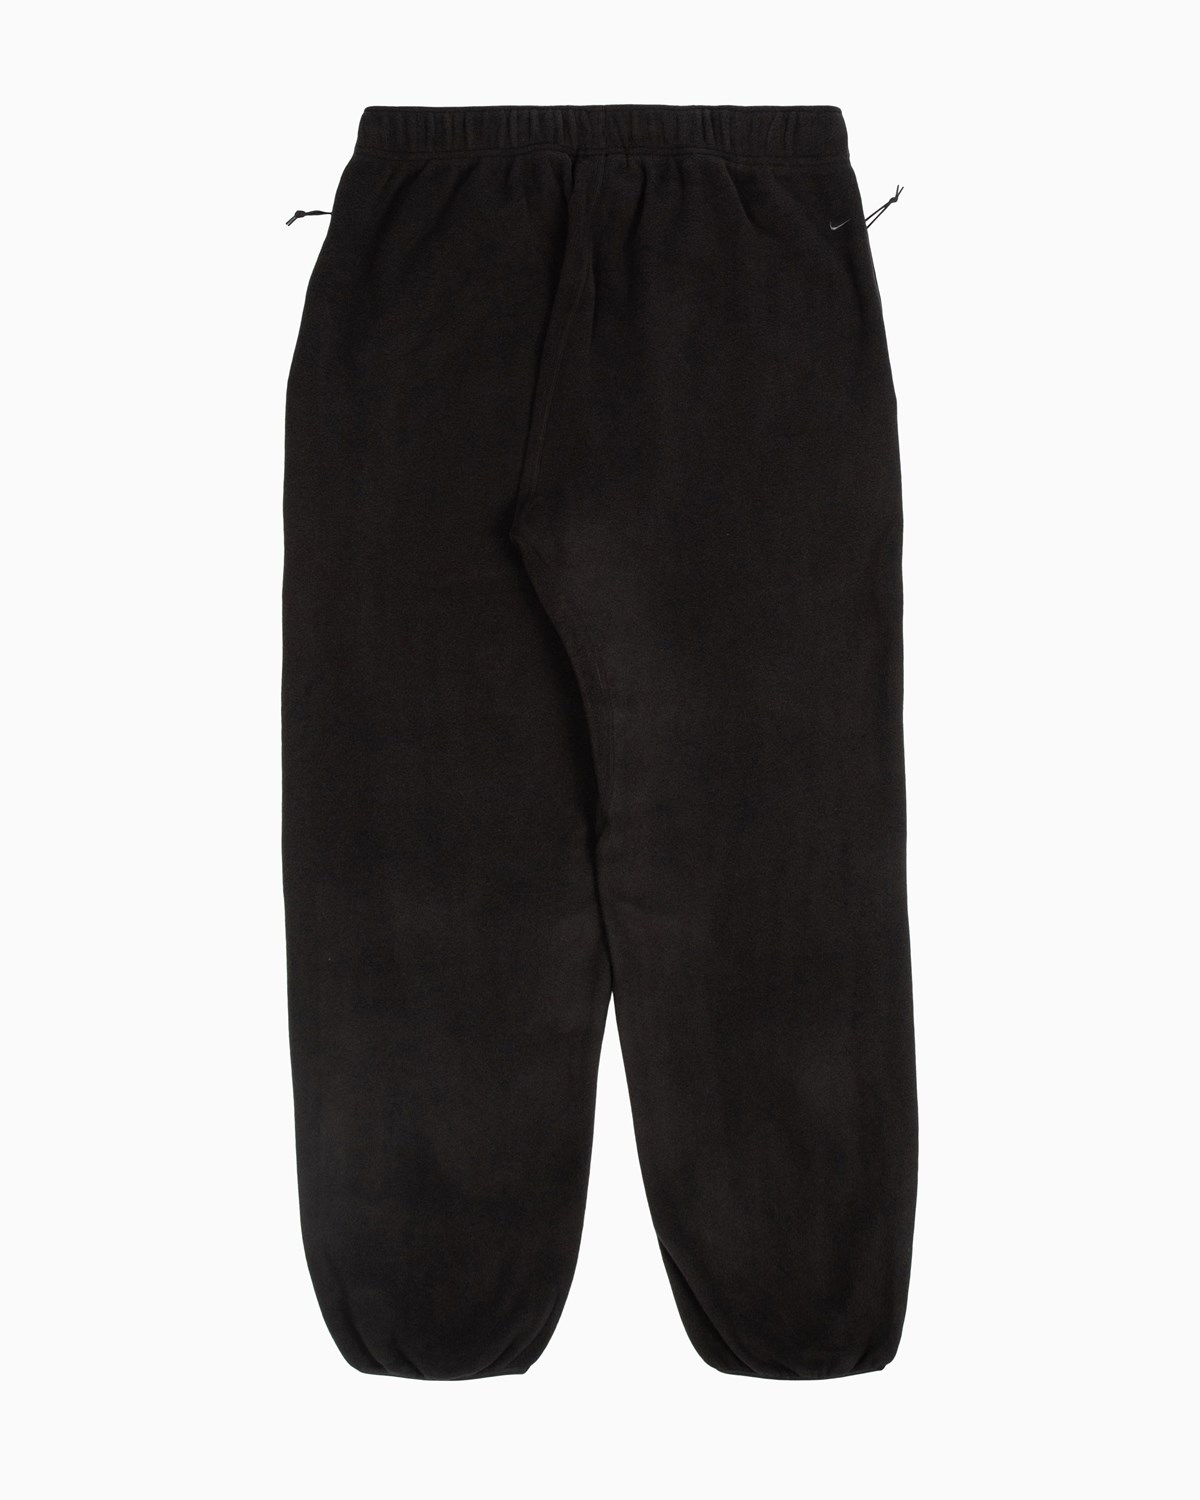 NRG ACG Polar Fleece Pant Nike Bottoms Pants Black